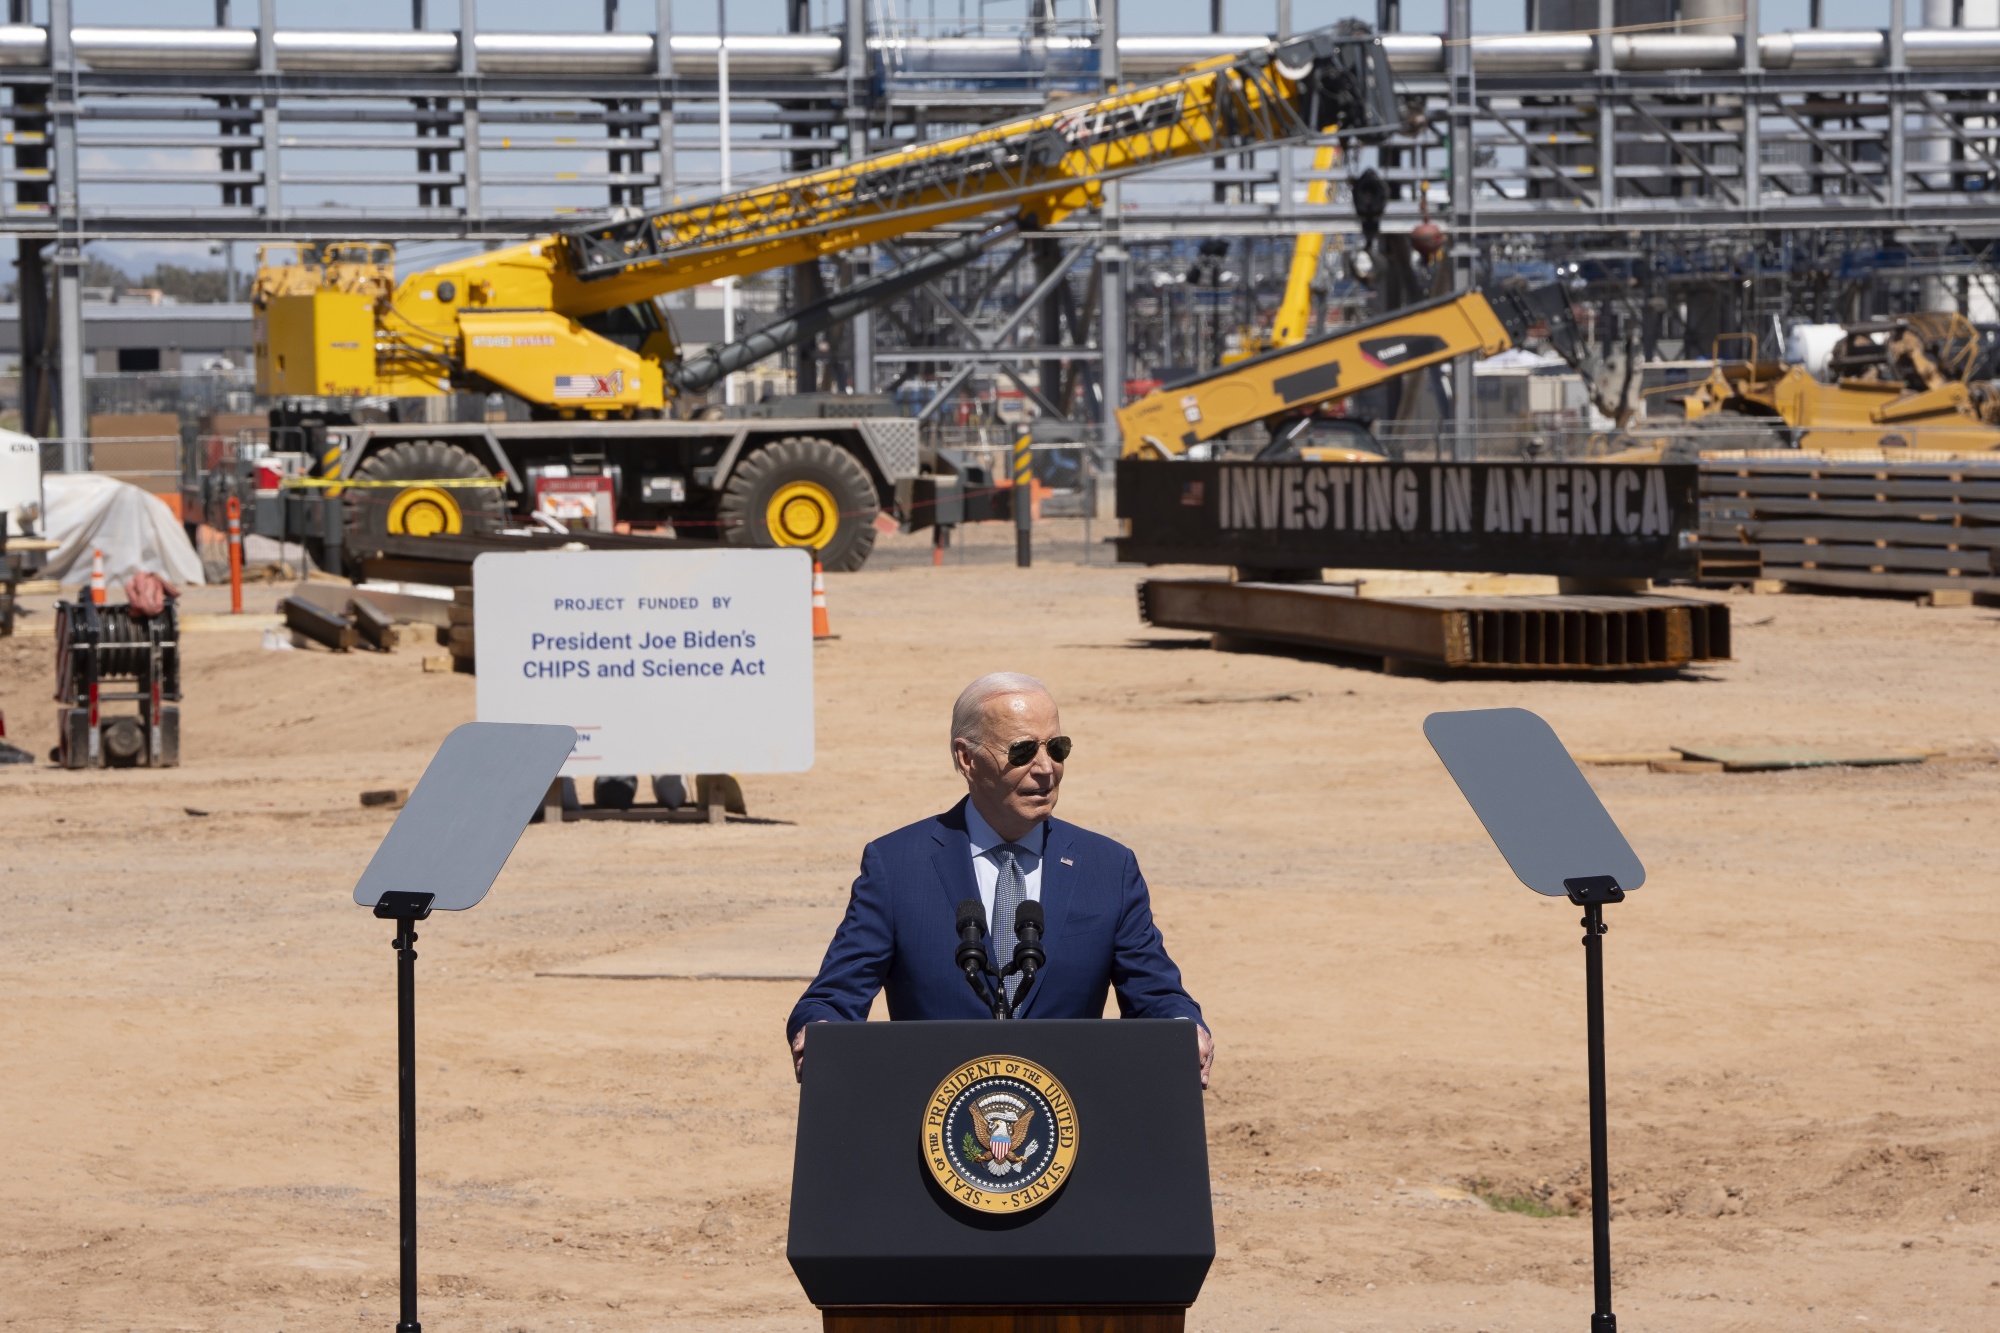 President Biden Speaks At The Intel Ocotillo Campus In Arizona